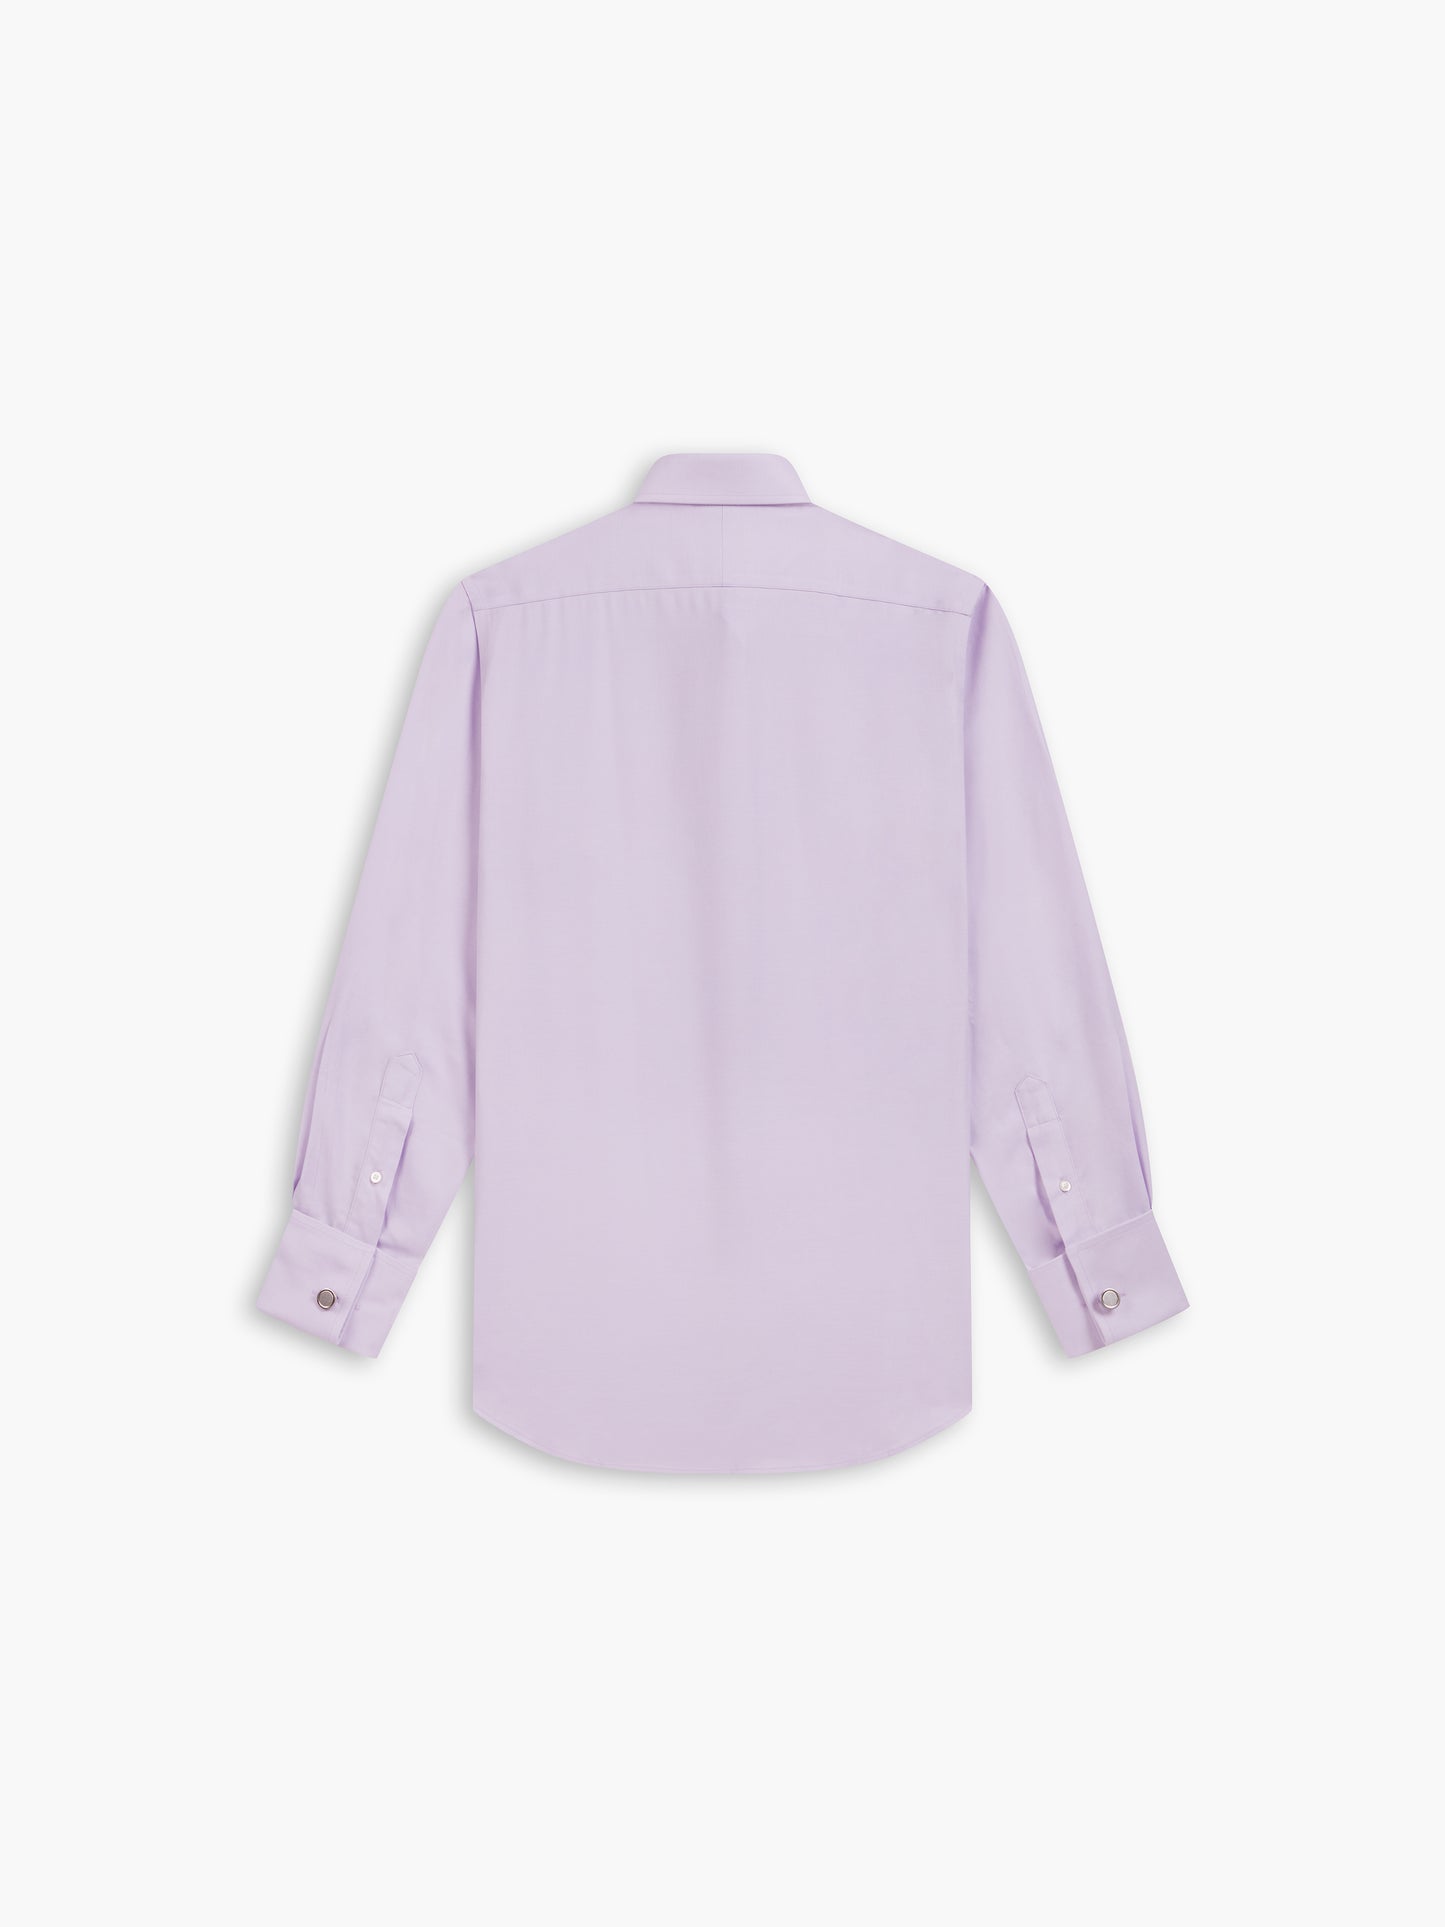 Non-Iron Lilac Twill Slim Fit Dual Cuff Classic Collar Shirt